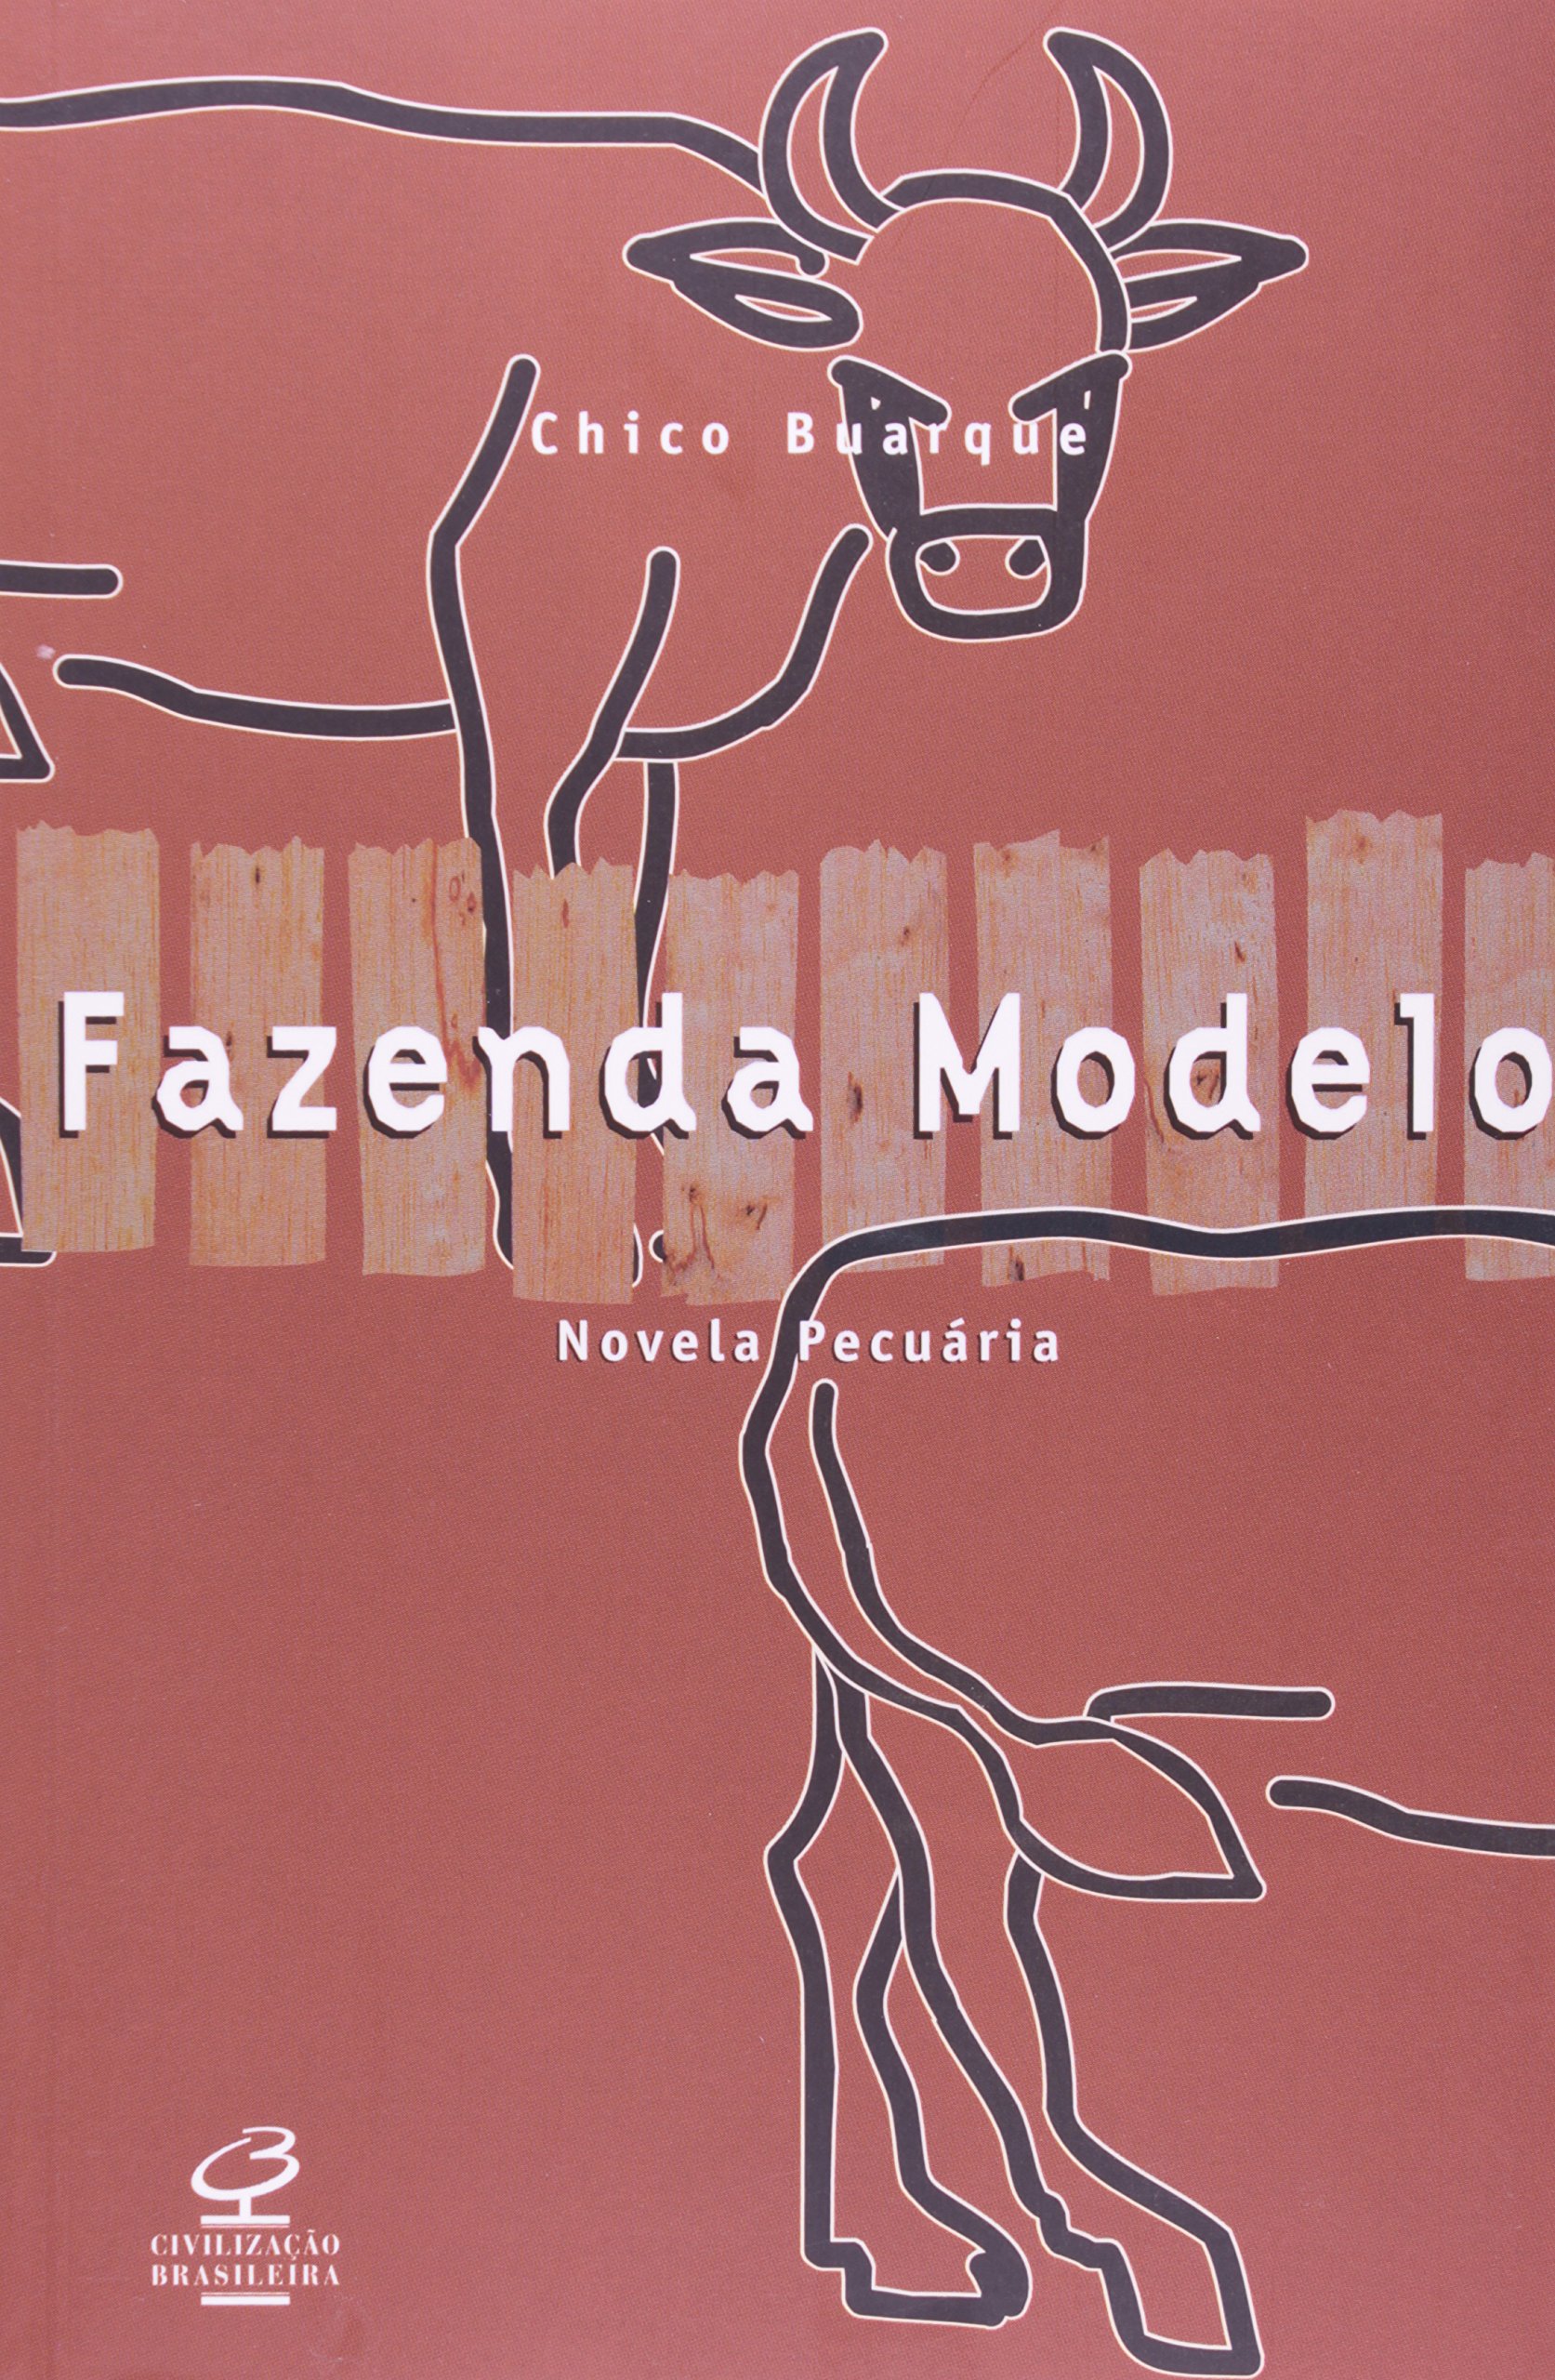 Fazenda Modelo (Portuguese language, 1974, Civilização Brasileira)